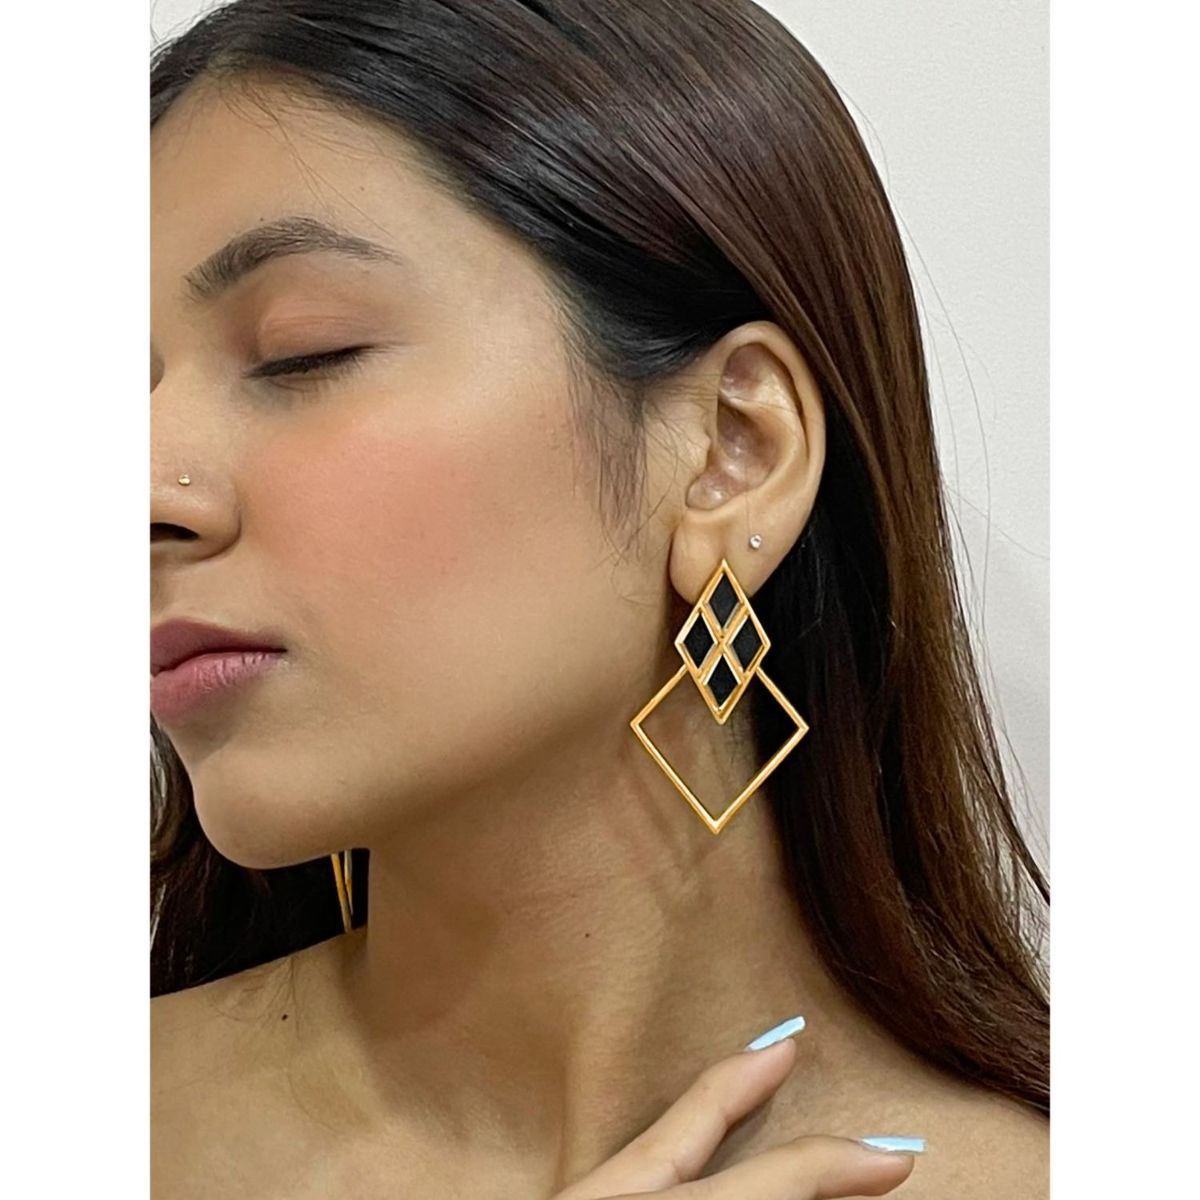 Discover more than 81 diamond shaped earrings